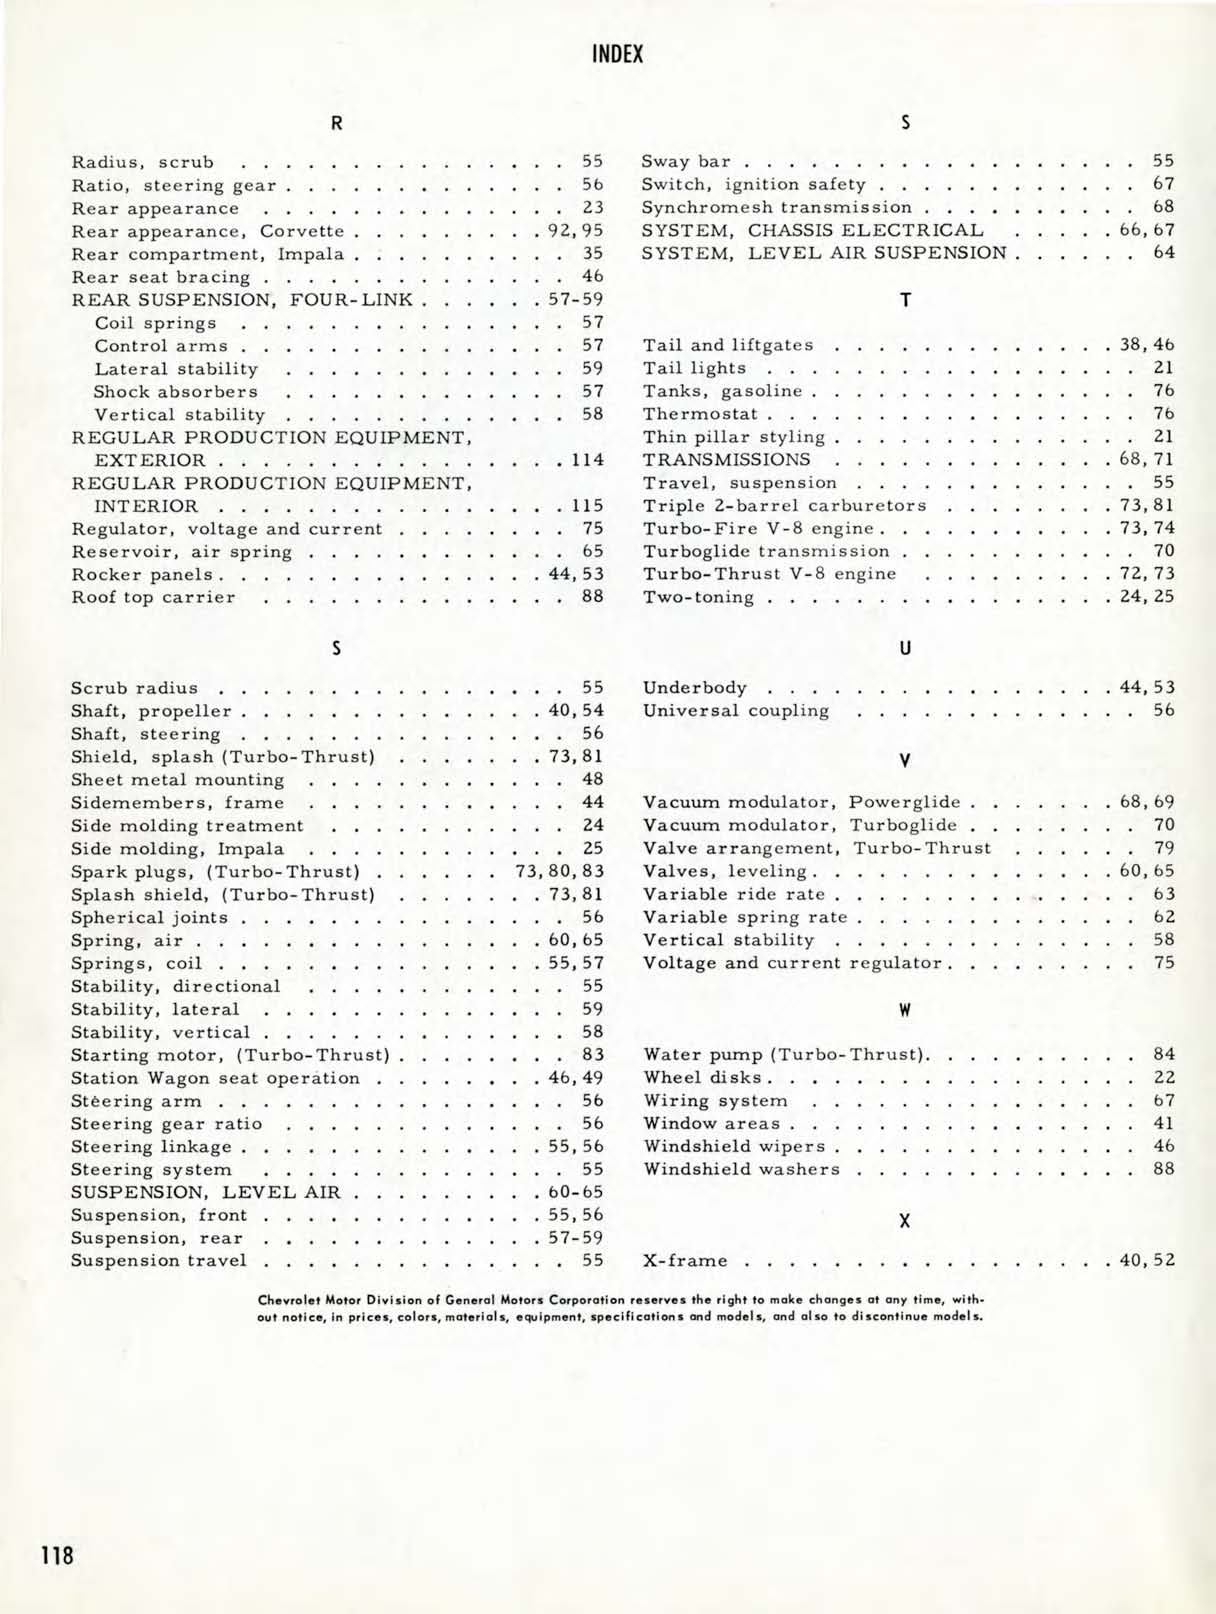 1958_Chevrolet_Engineering_Features-118